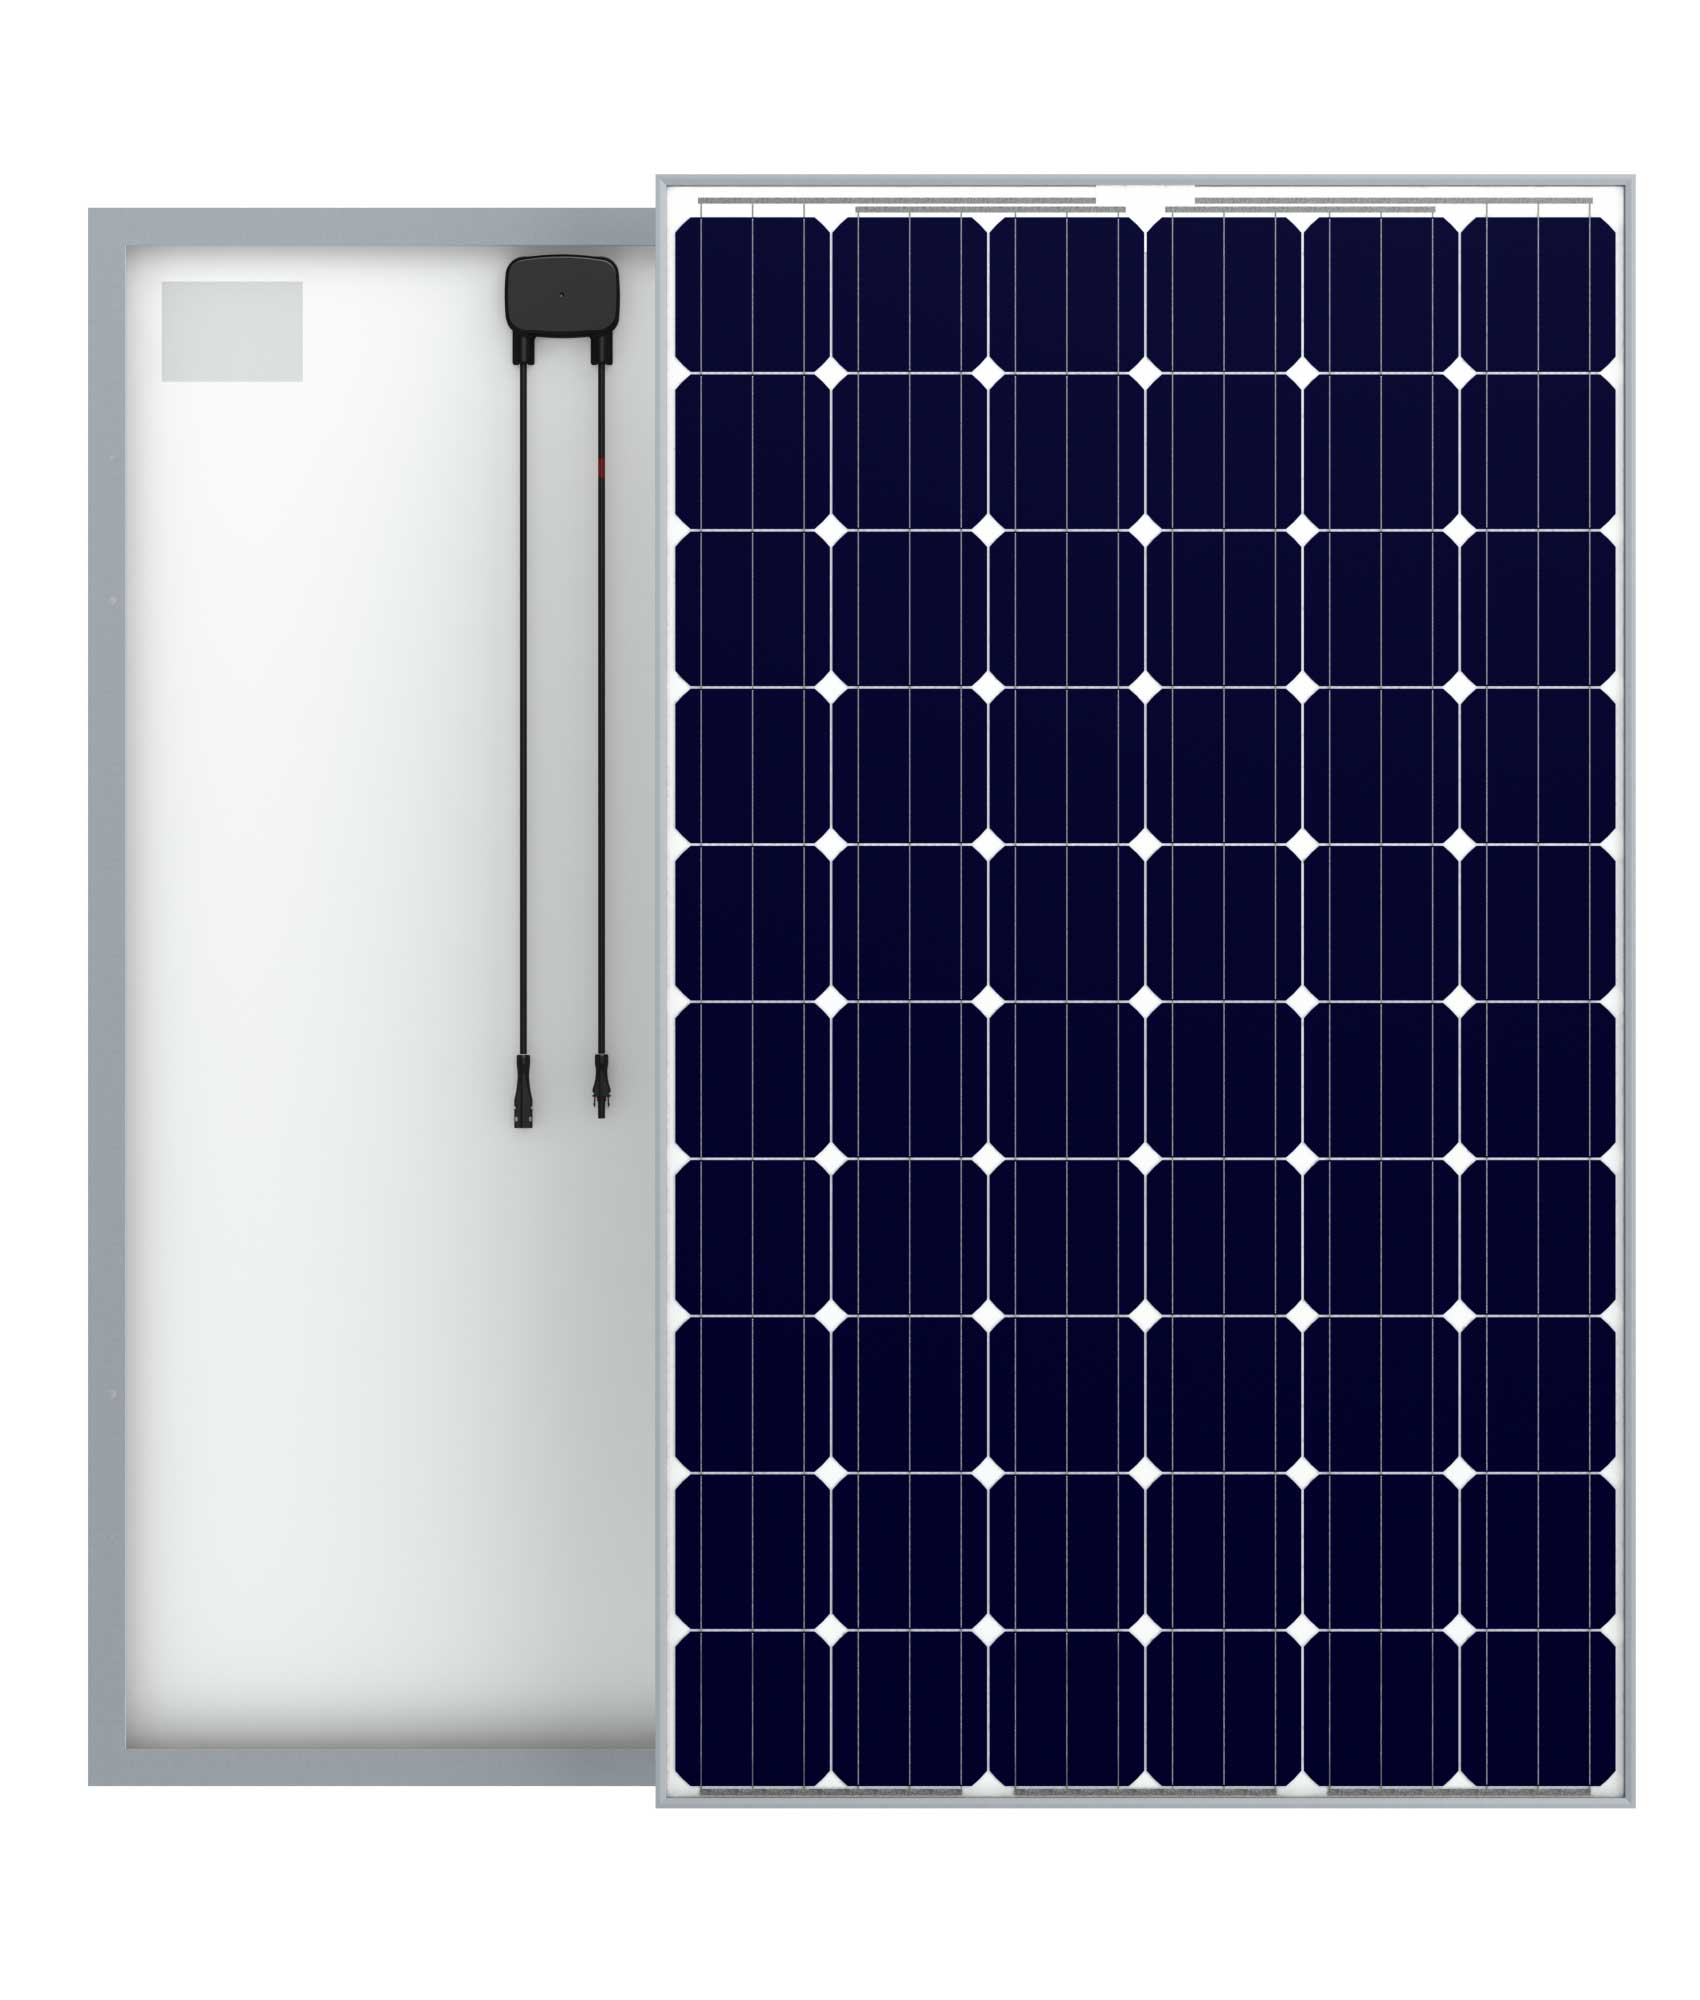 Solar photovoltaic module RZMP 60-275-M3W20